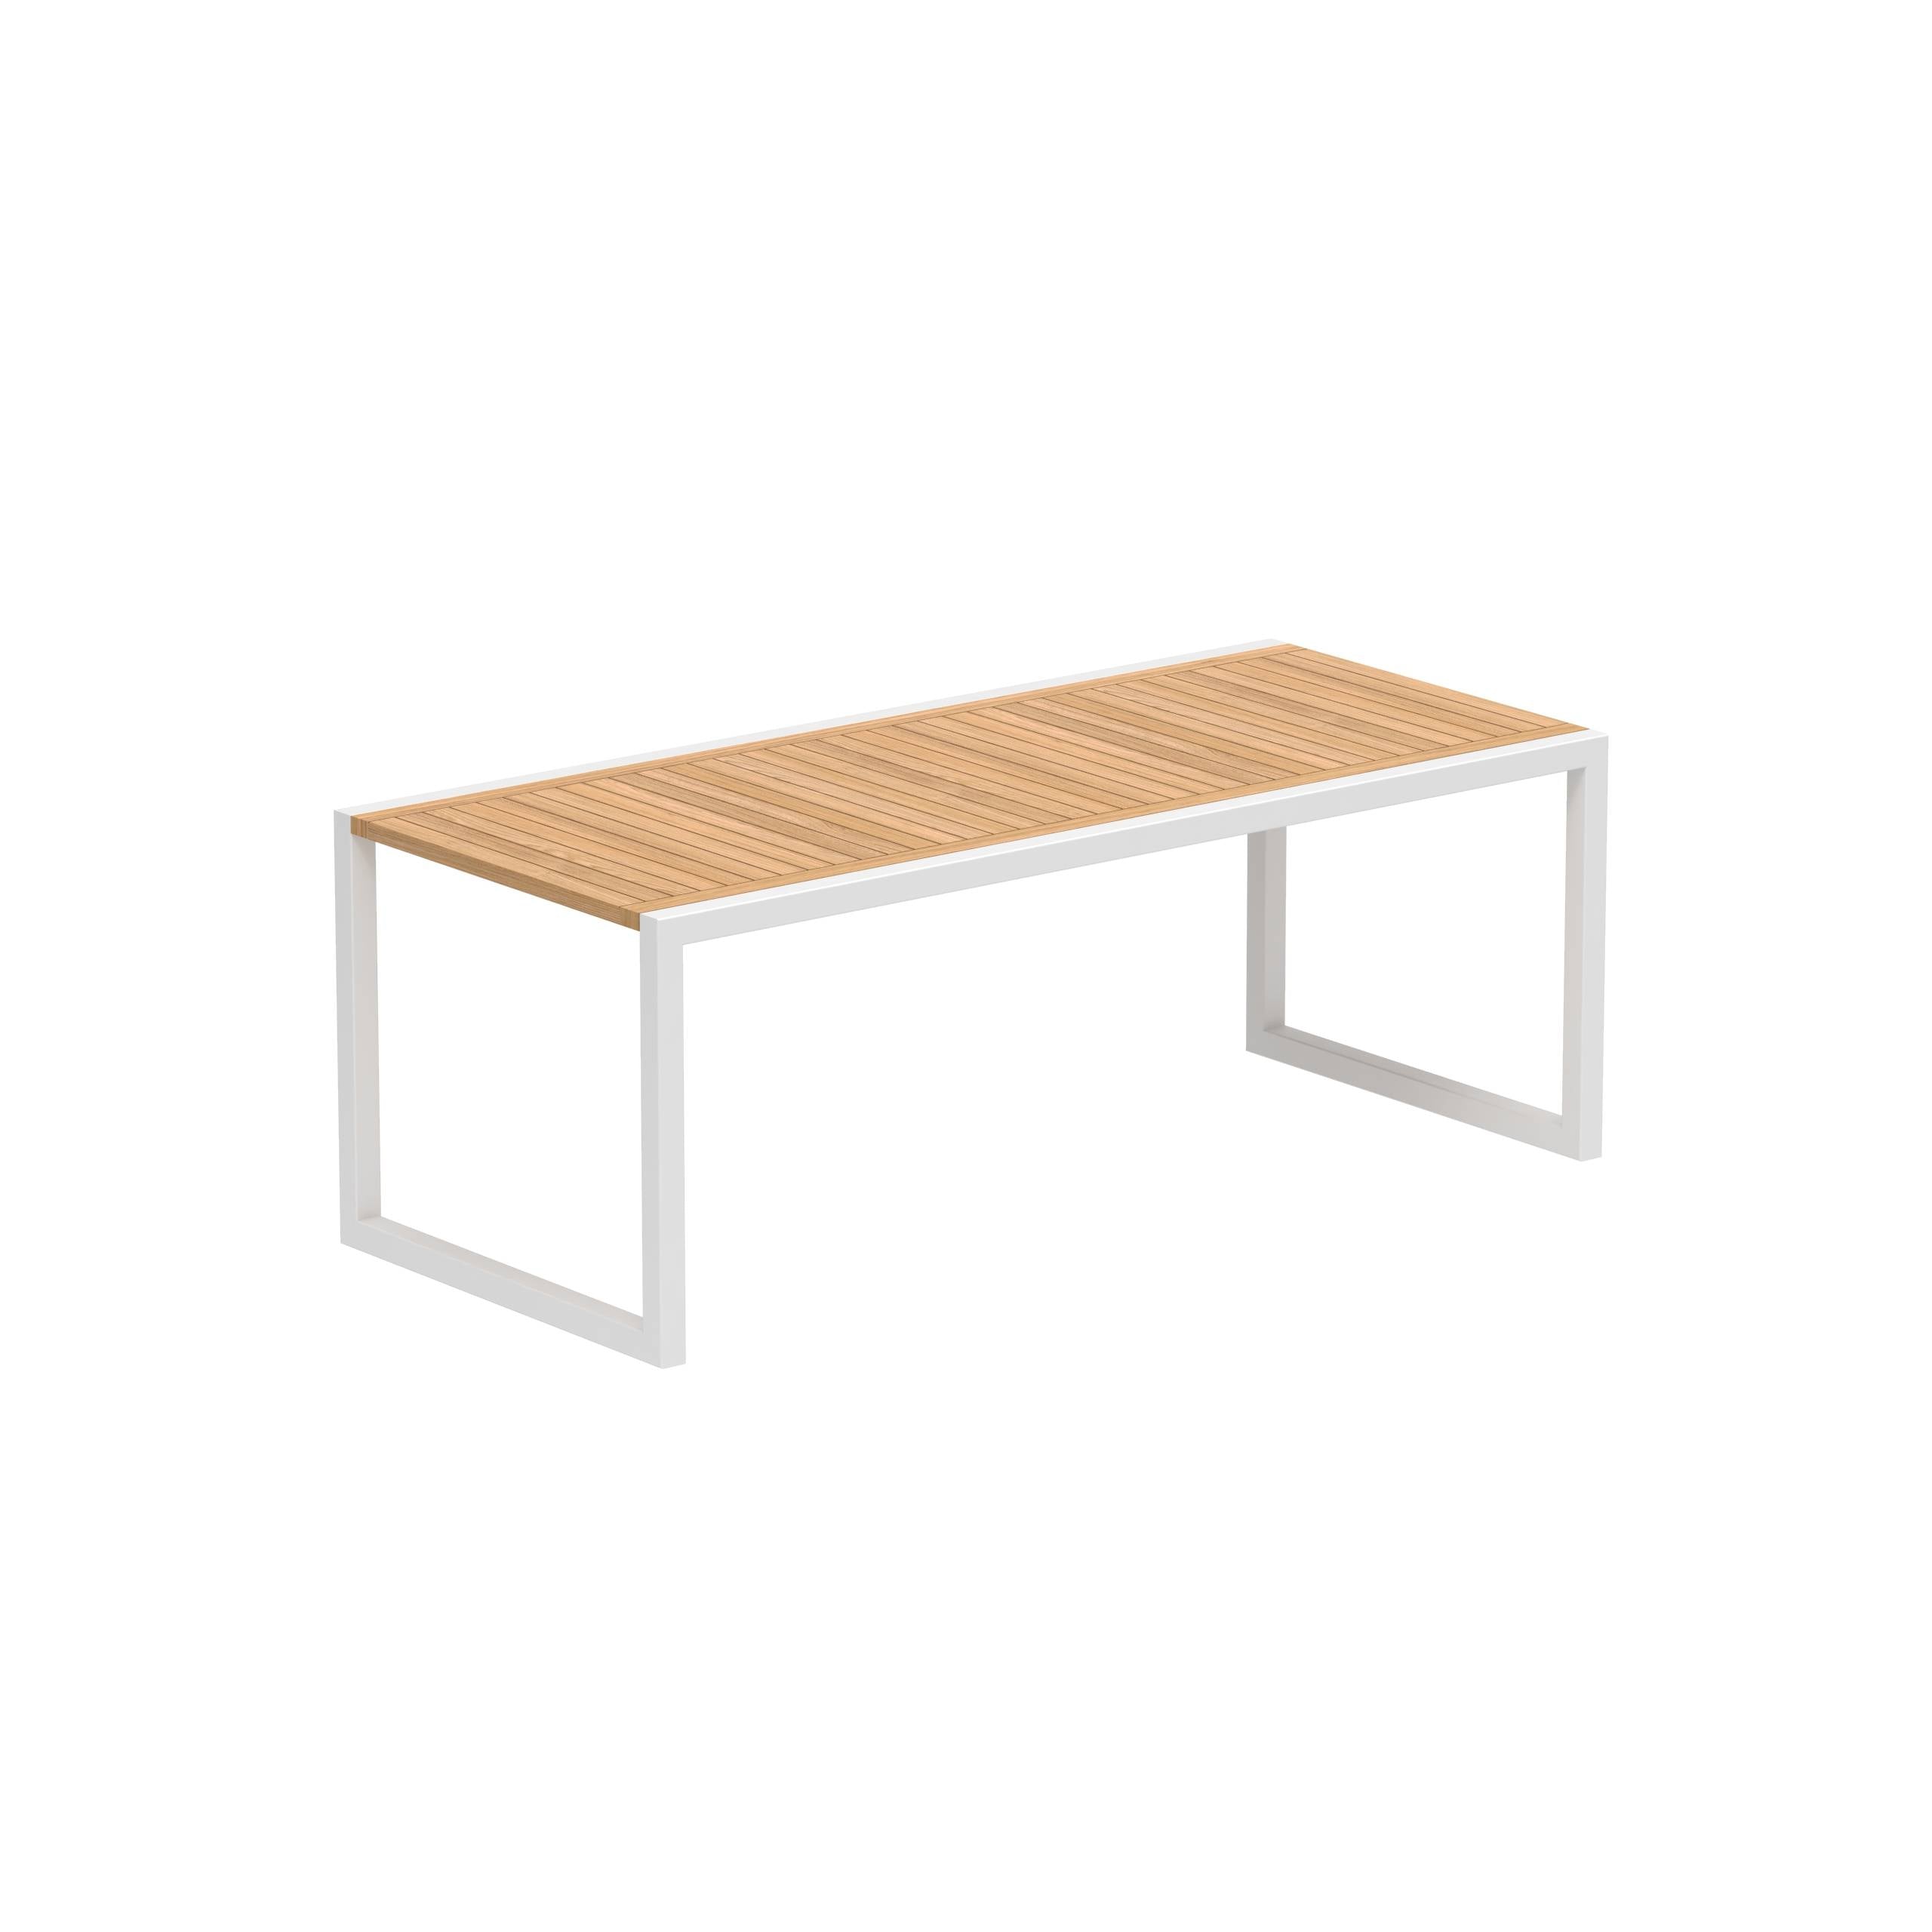 Ninix Table 200x90cm White Frame And Teak Top